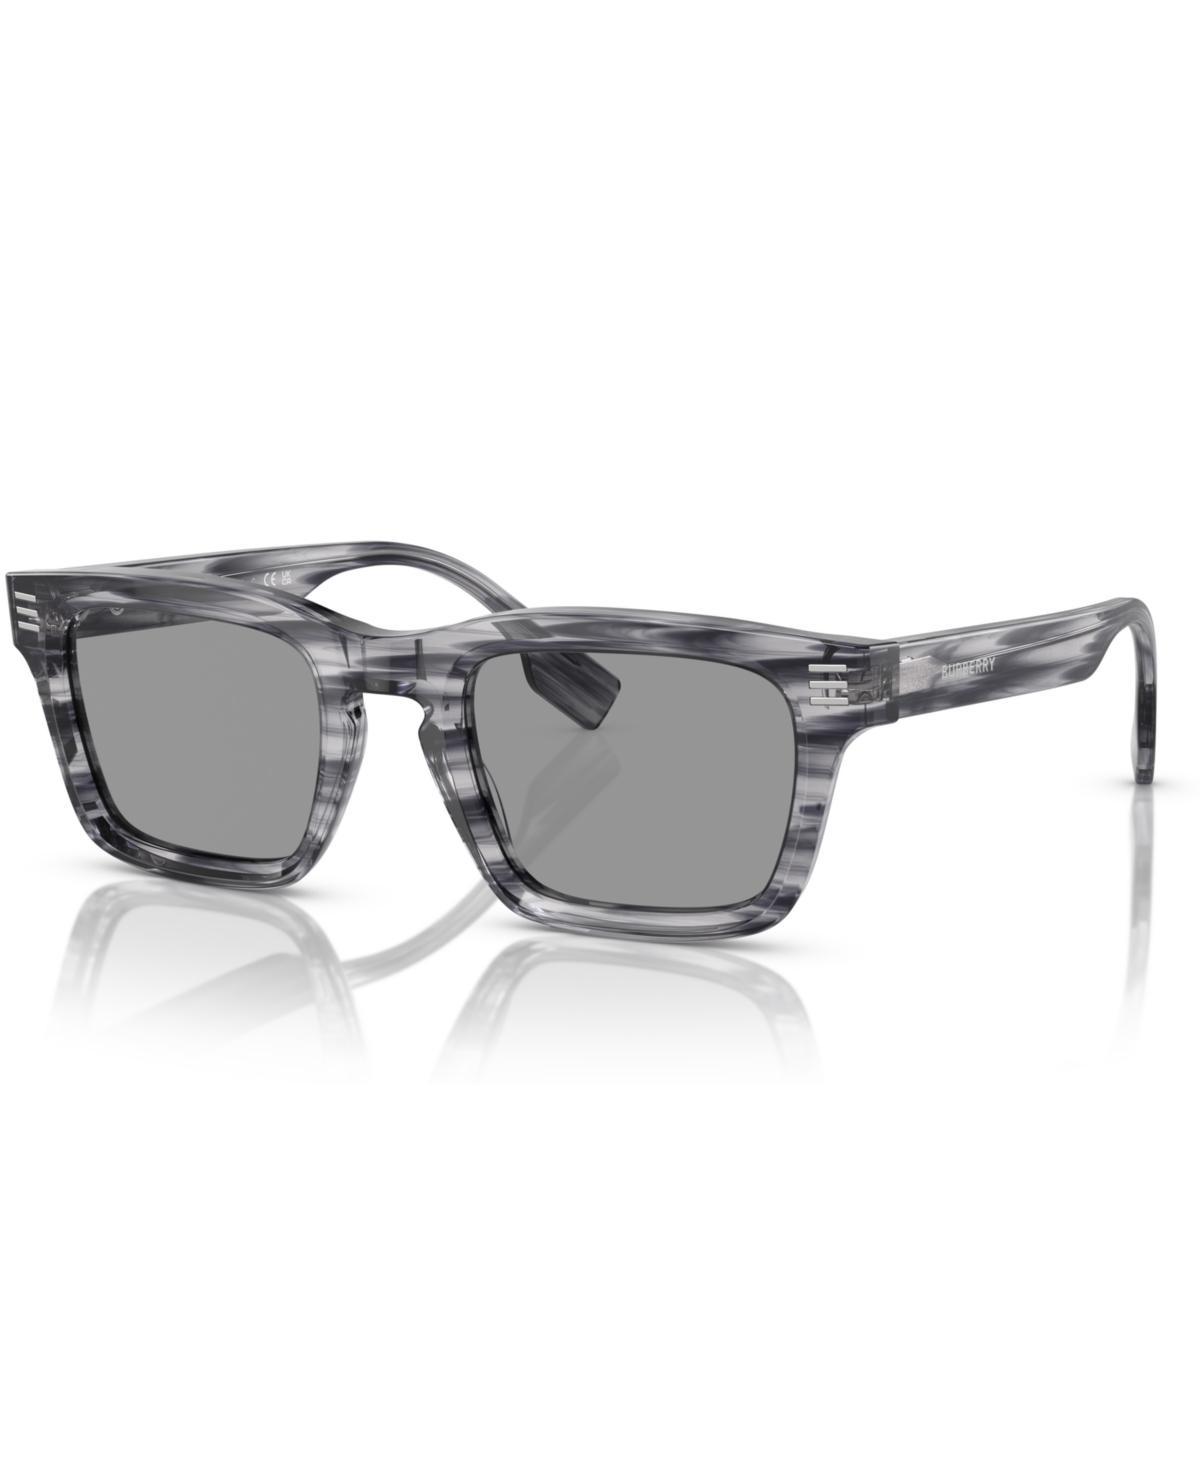 burberry 51mm Rectangular Sunglasses Product Image